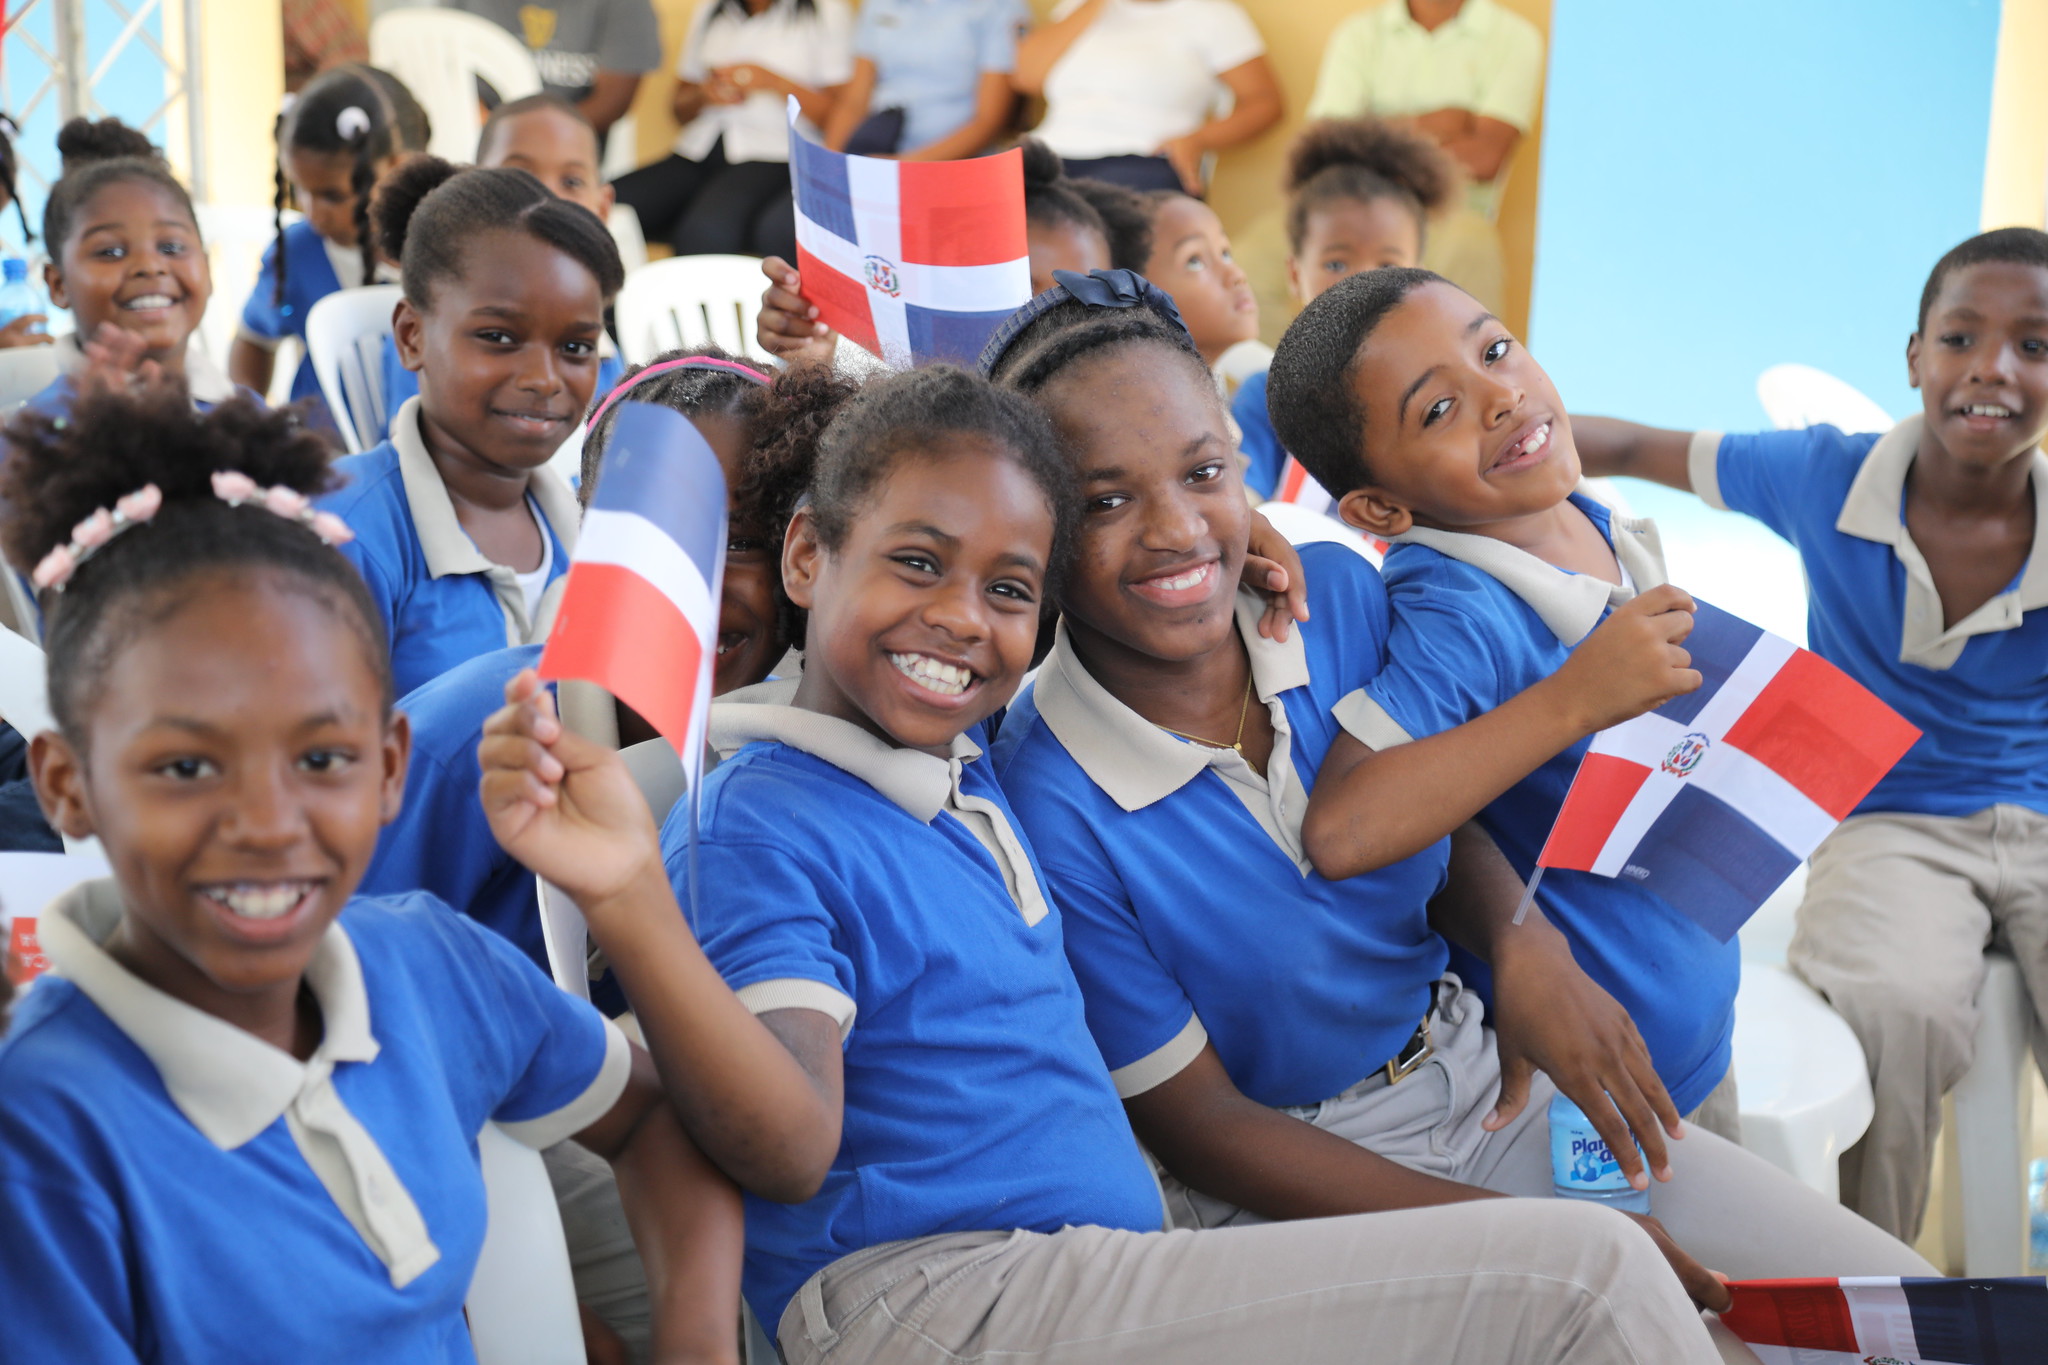 REPÚBLICA DOMINICANA: Danilo Medina entrega centro educativo en Los Frailes, Santo Domingo Este; beneficiará a 980 estudiantes